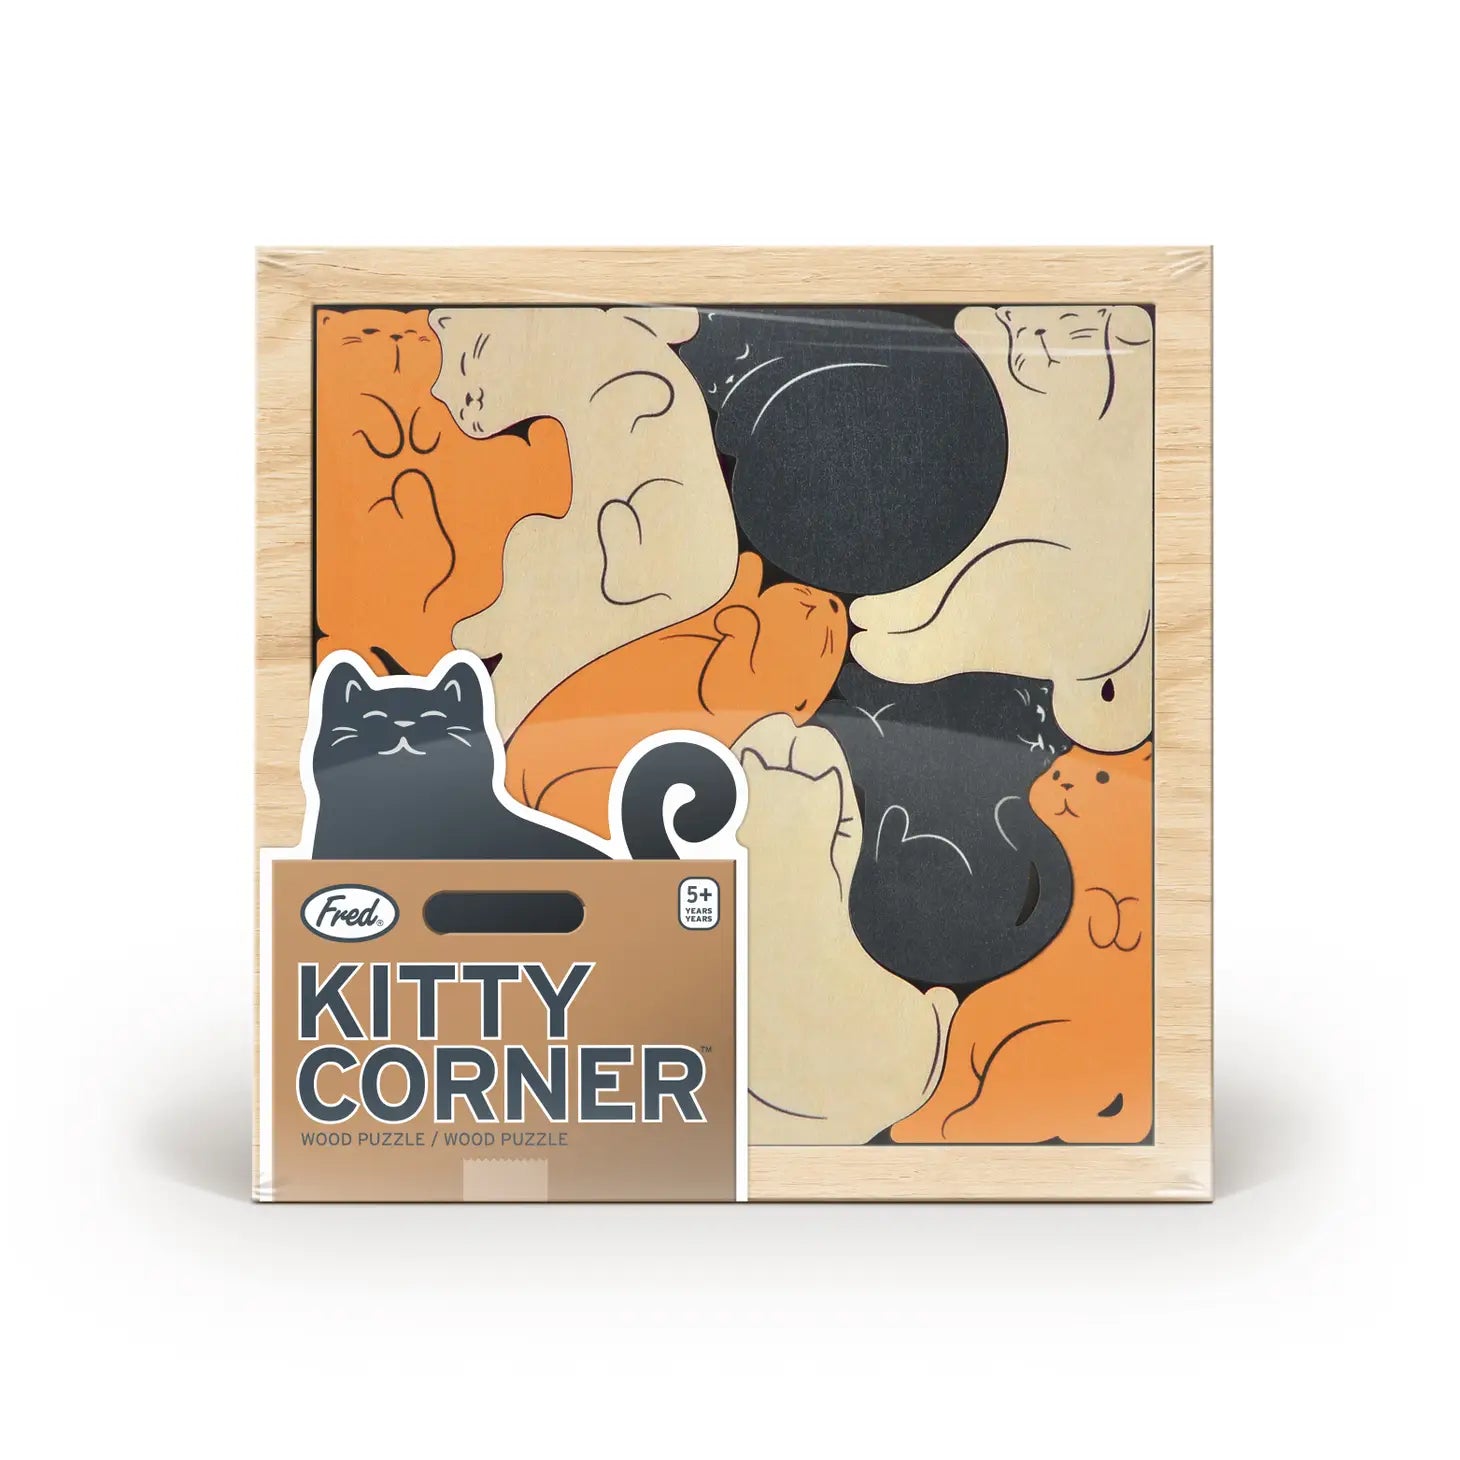 Kitty Corner - Wooden Puzzle